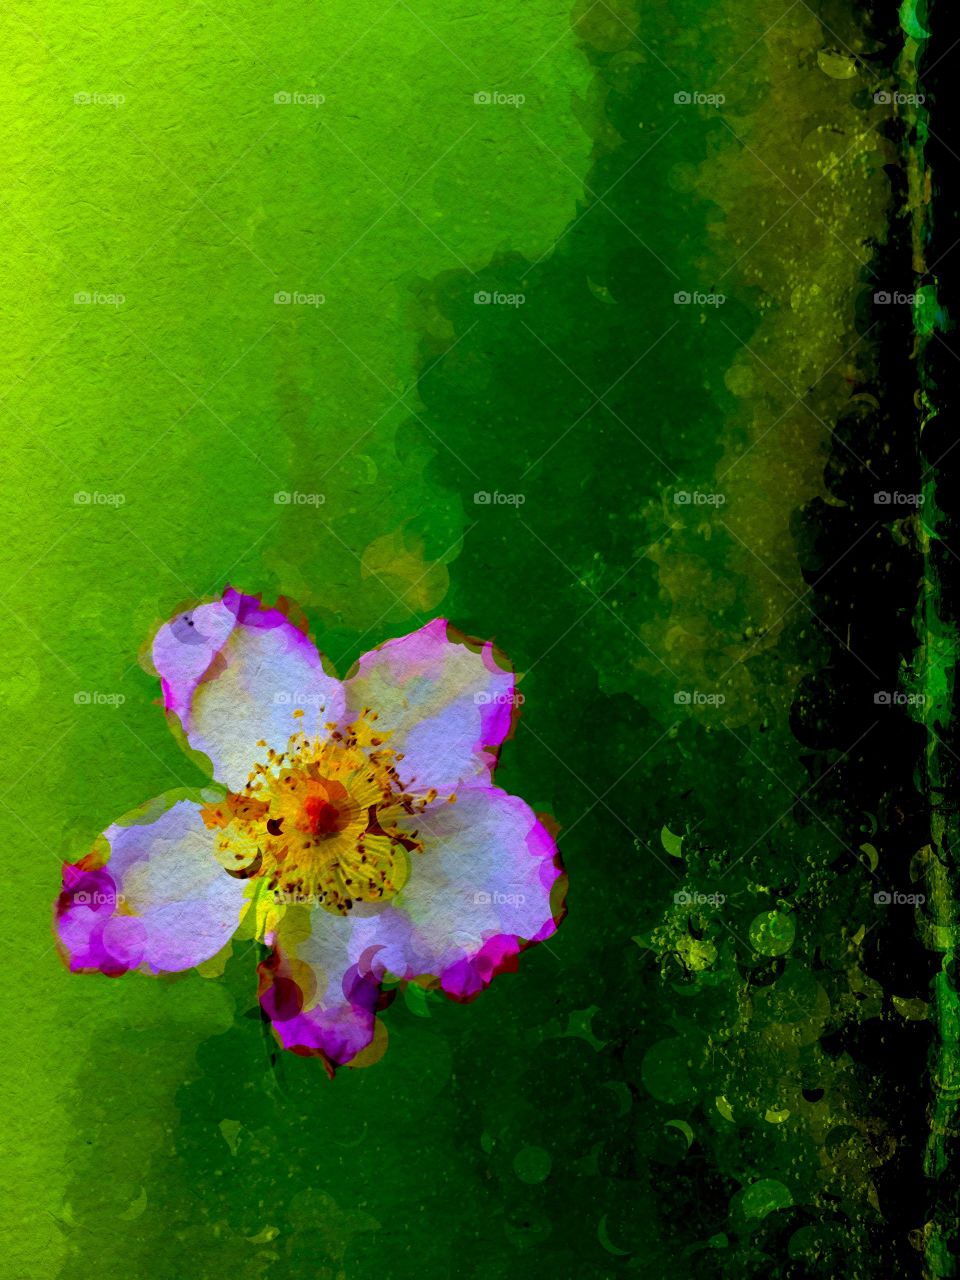 Flower in the swamp, artistic flower, flower petal
